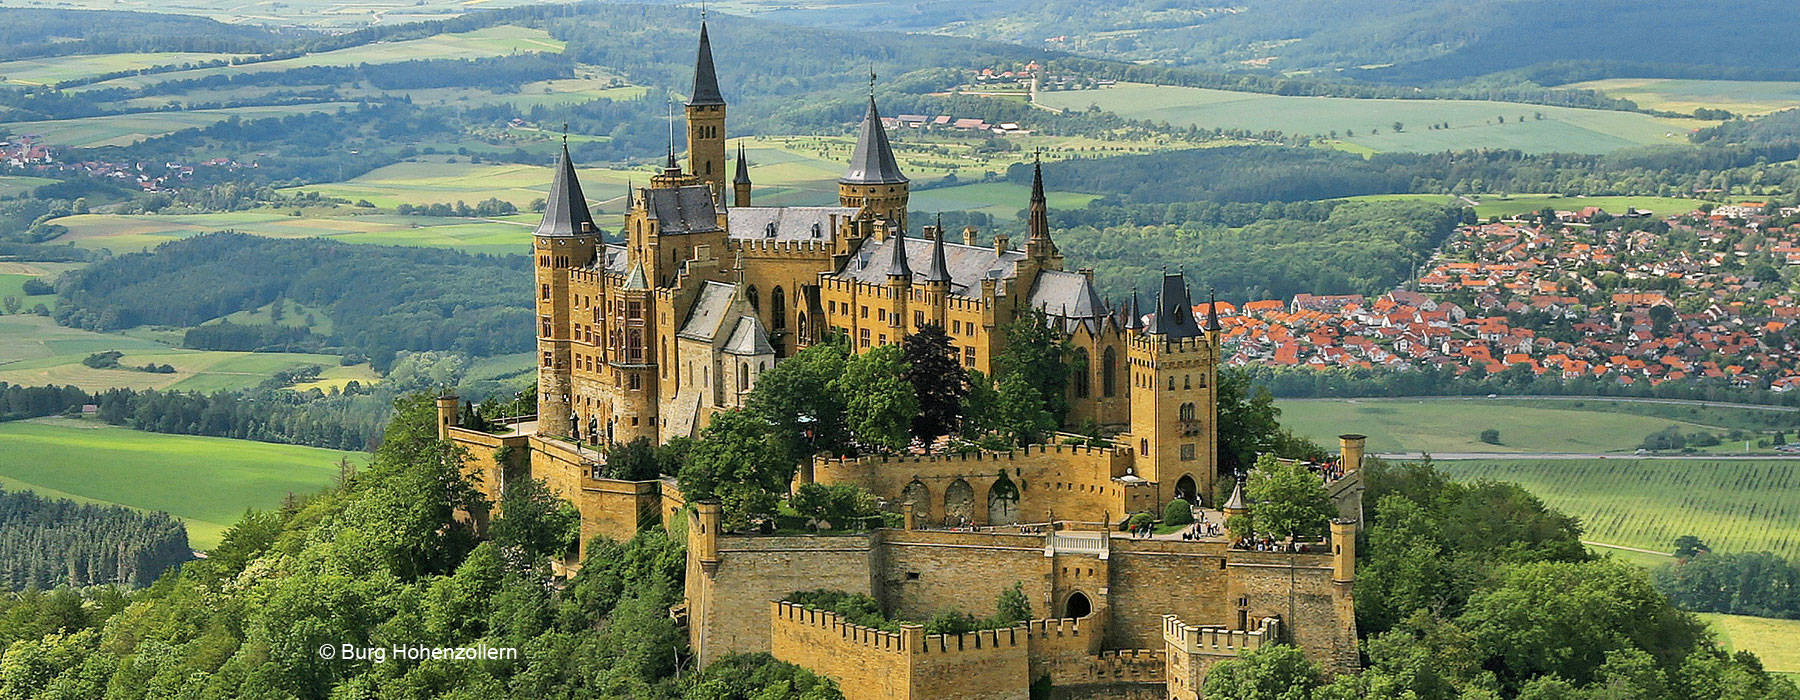 Castelo Hohenzollern